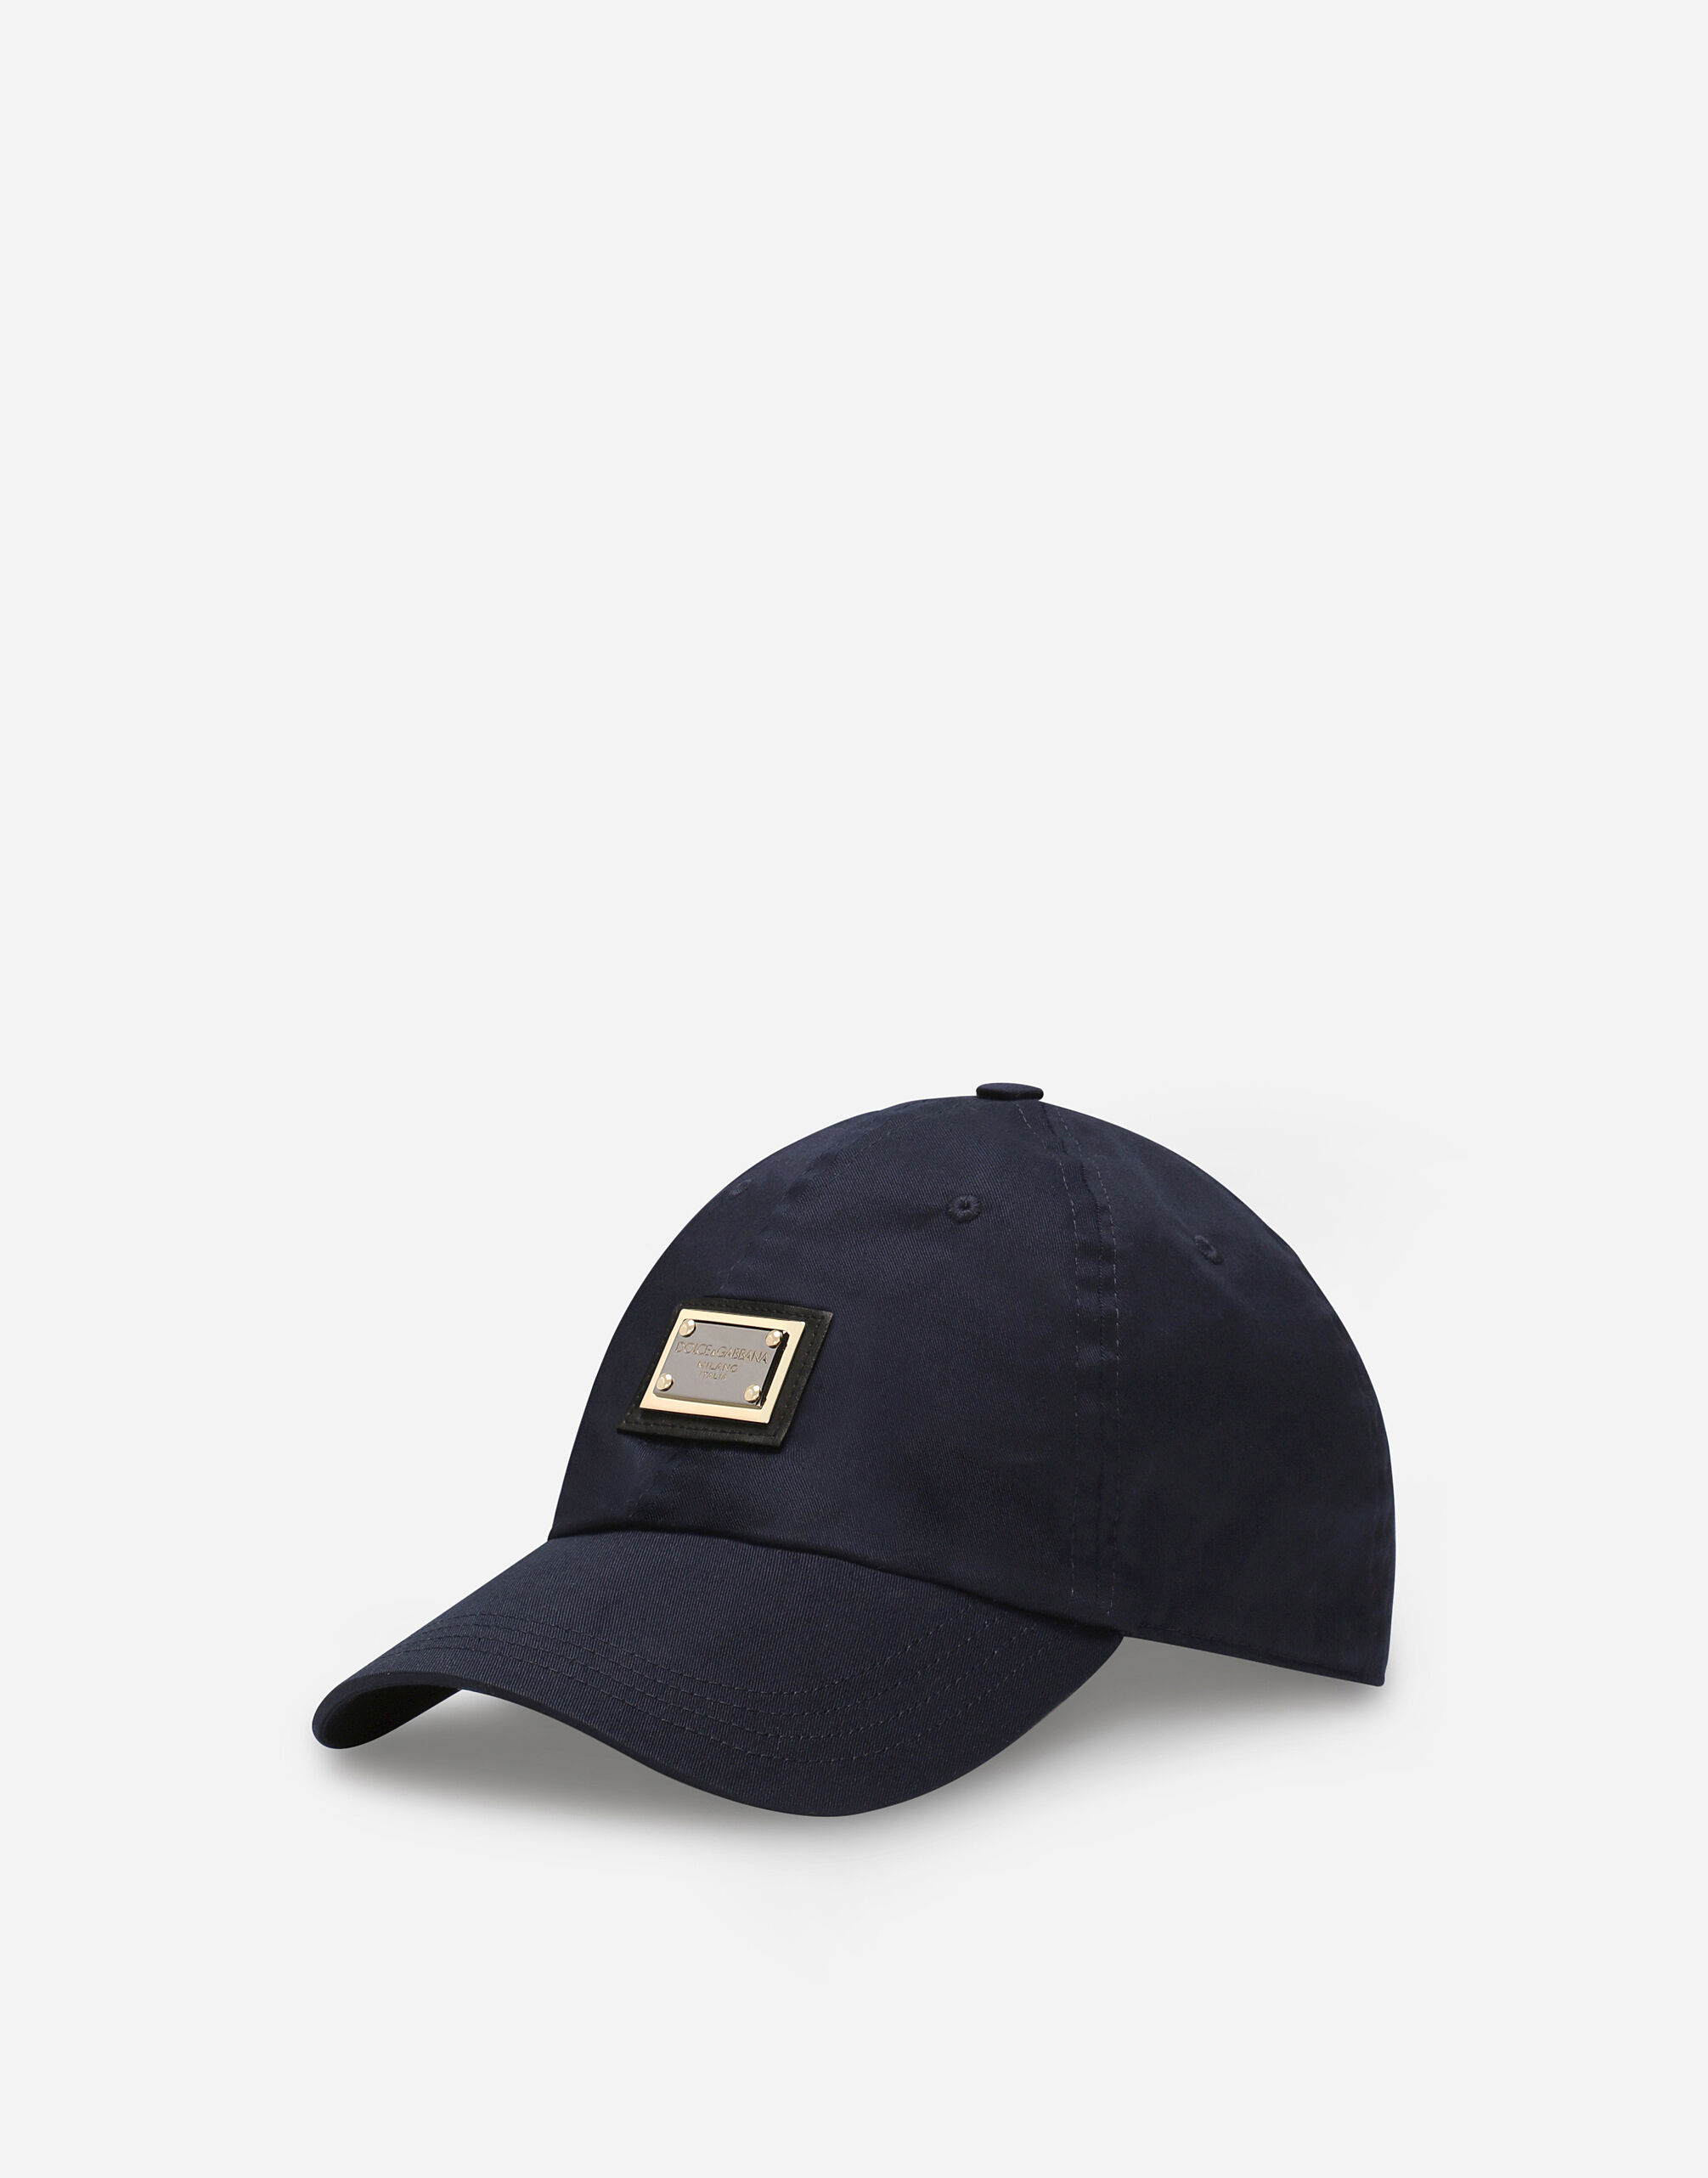 Dolce & Gabbana 标牌棉质棒球帽 绿 GH874ZFUFJU